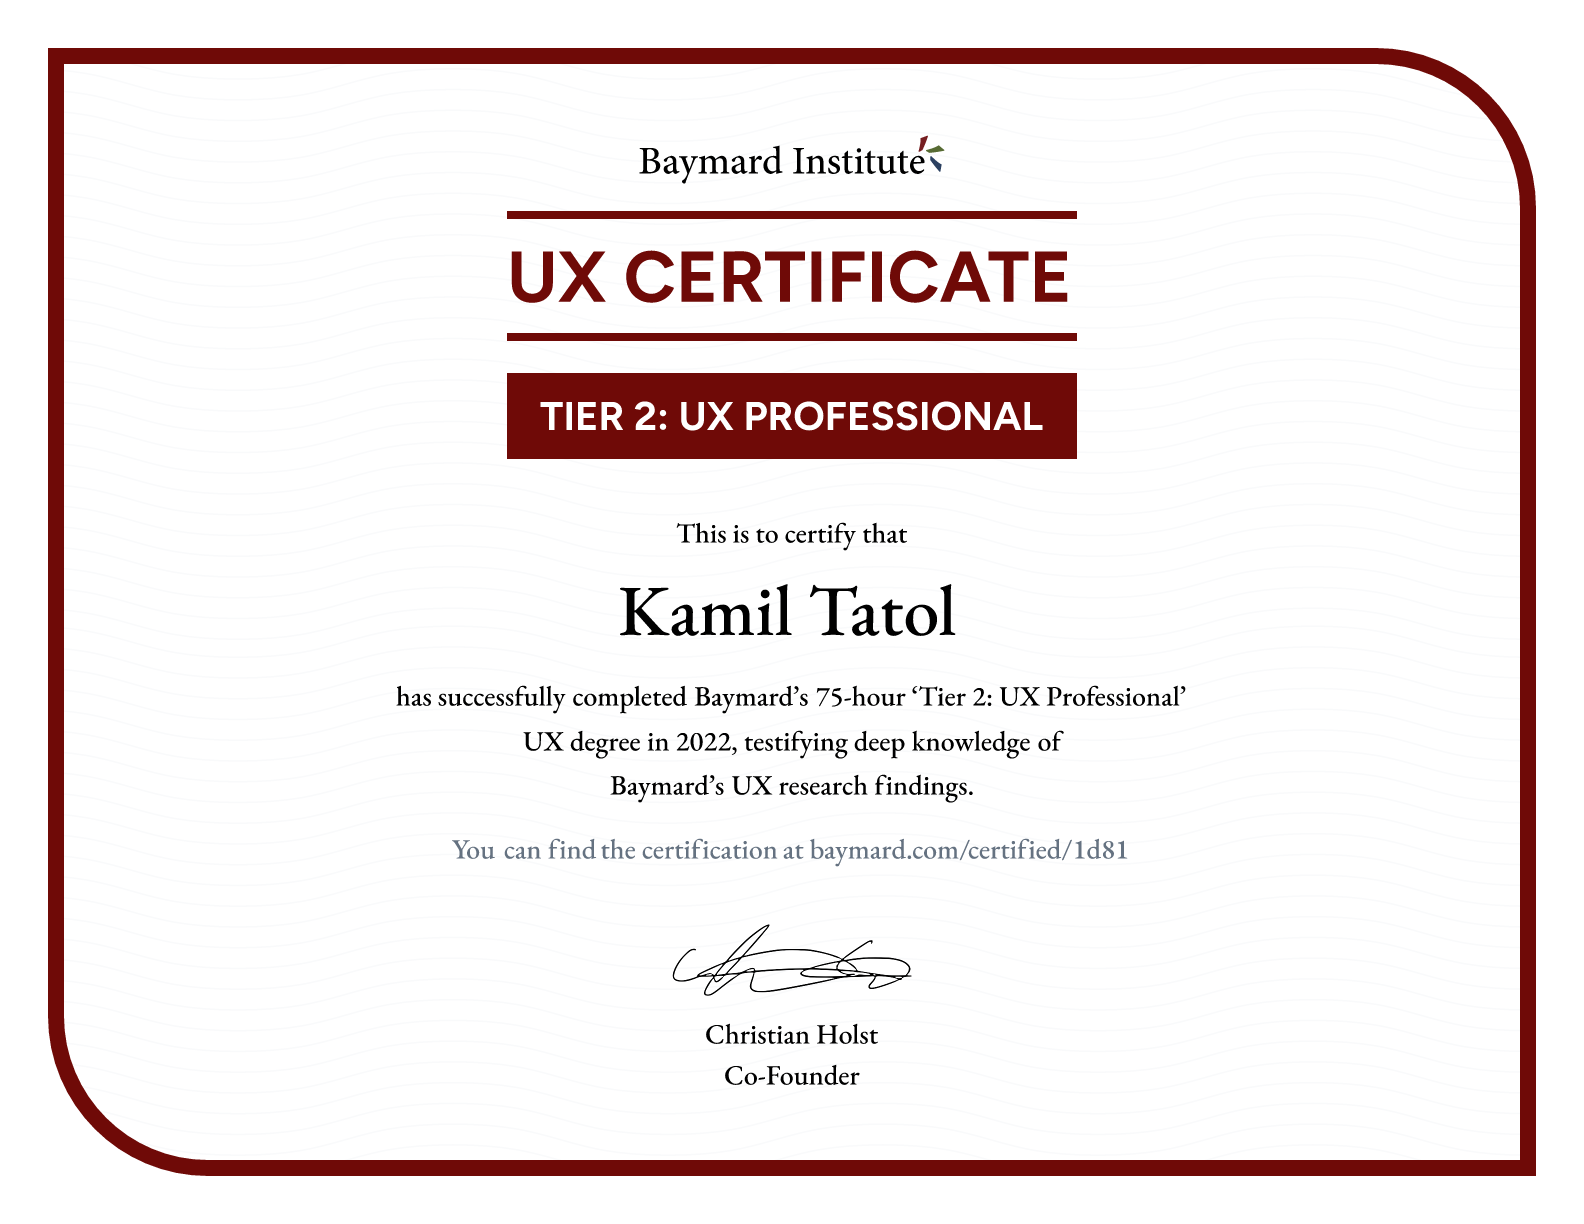 Kamil Tatol’s certificate